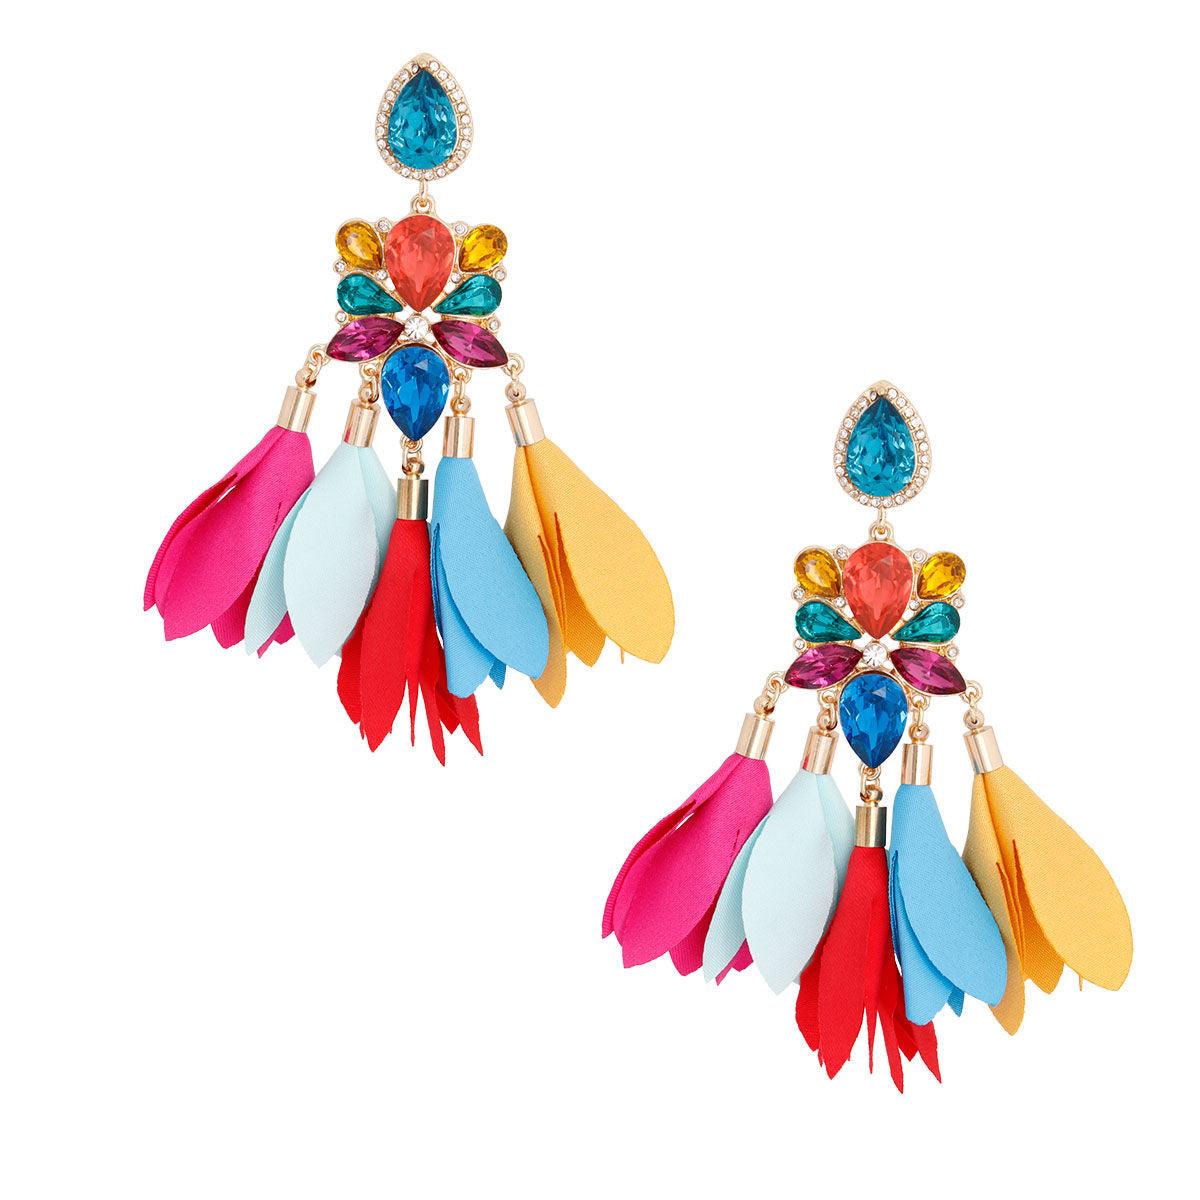 Shop Stunning Multicolor Teardrop Flower Earrings - Perfect Accessory!